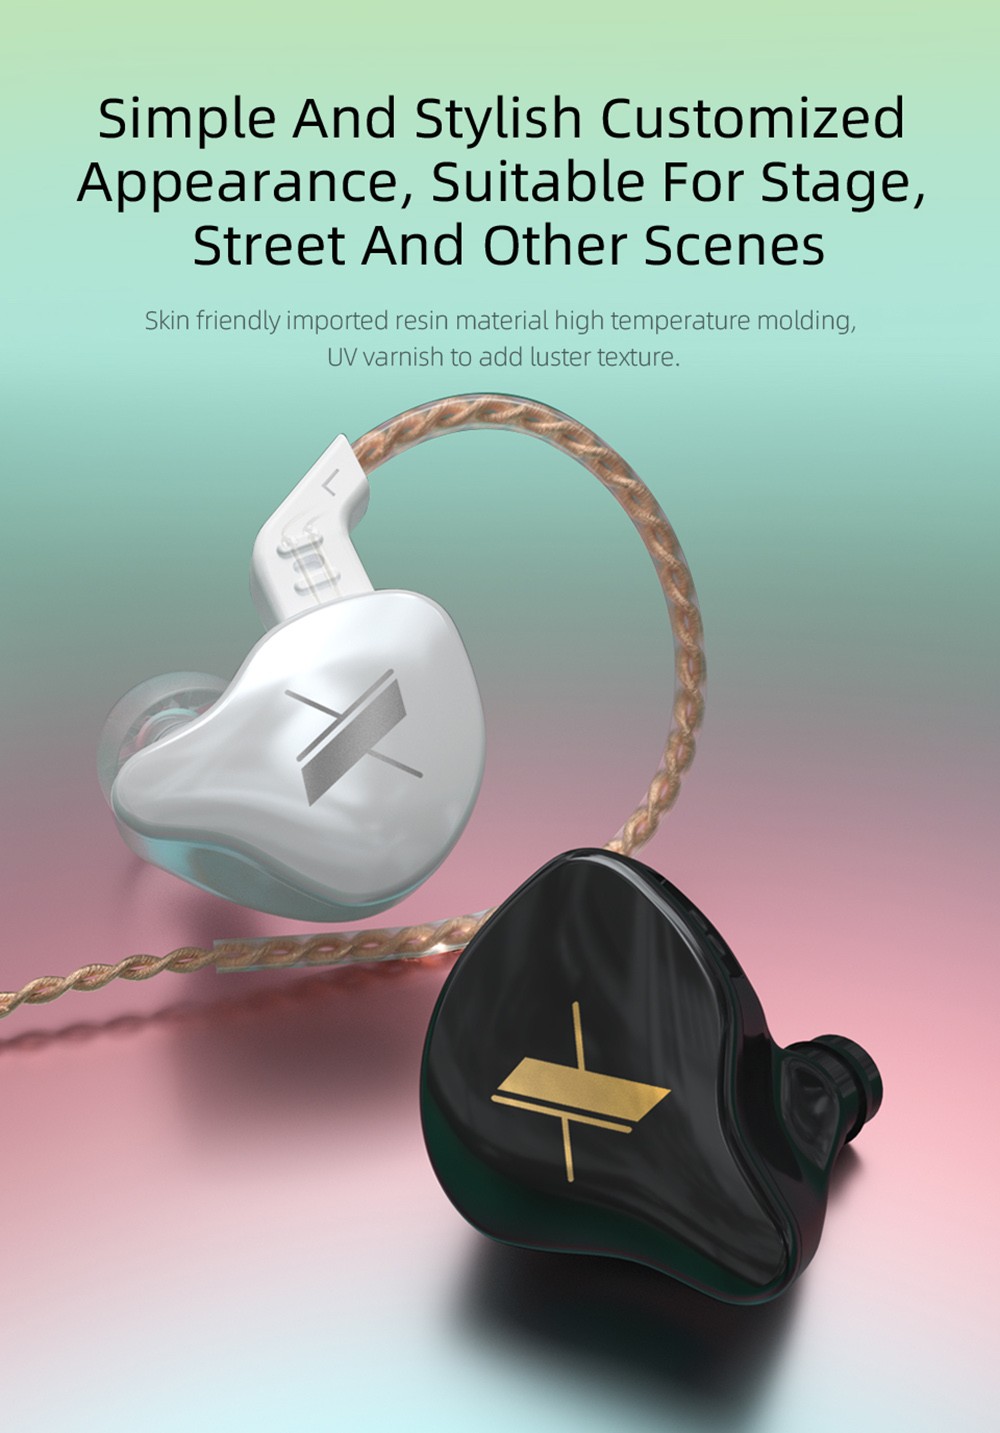 KZ EDX with Mic Wired Earphone In-ear Sport Noise Cancelling Headset - White